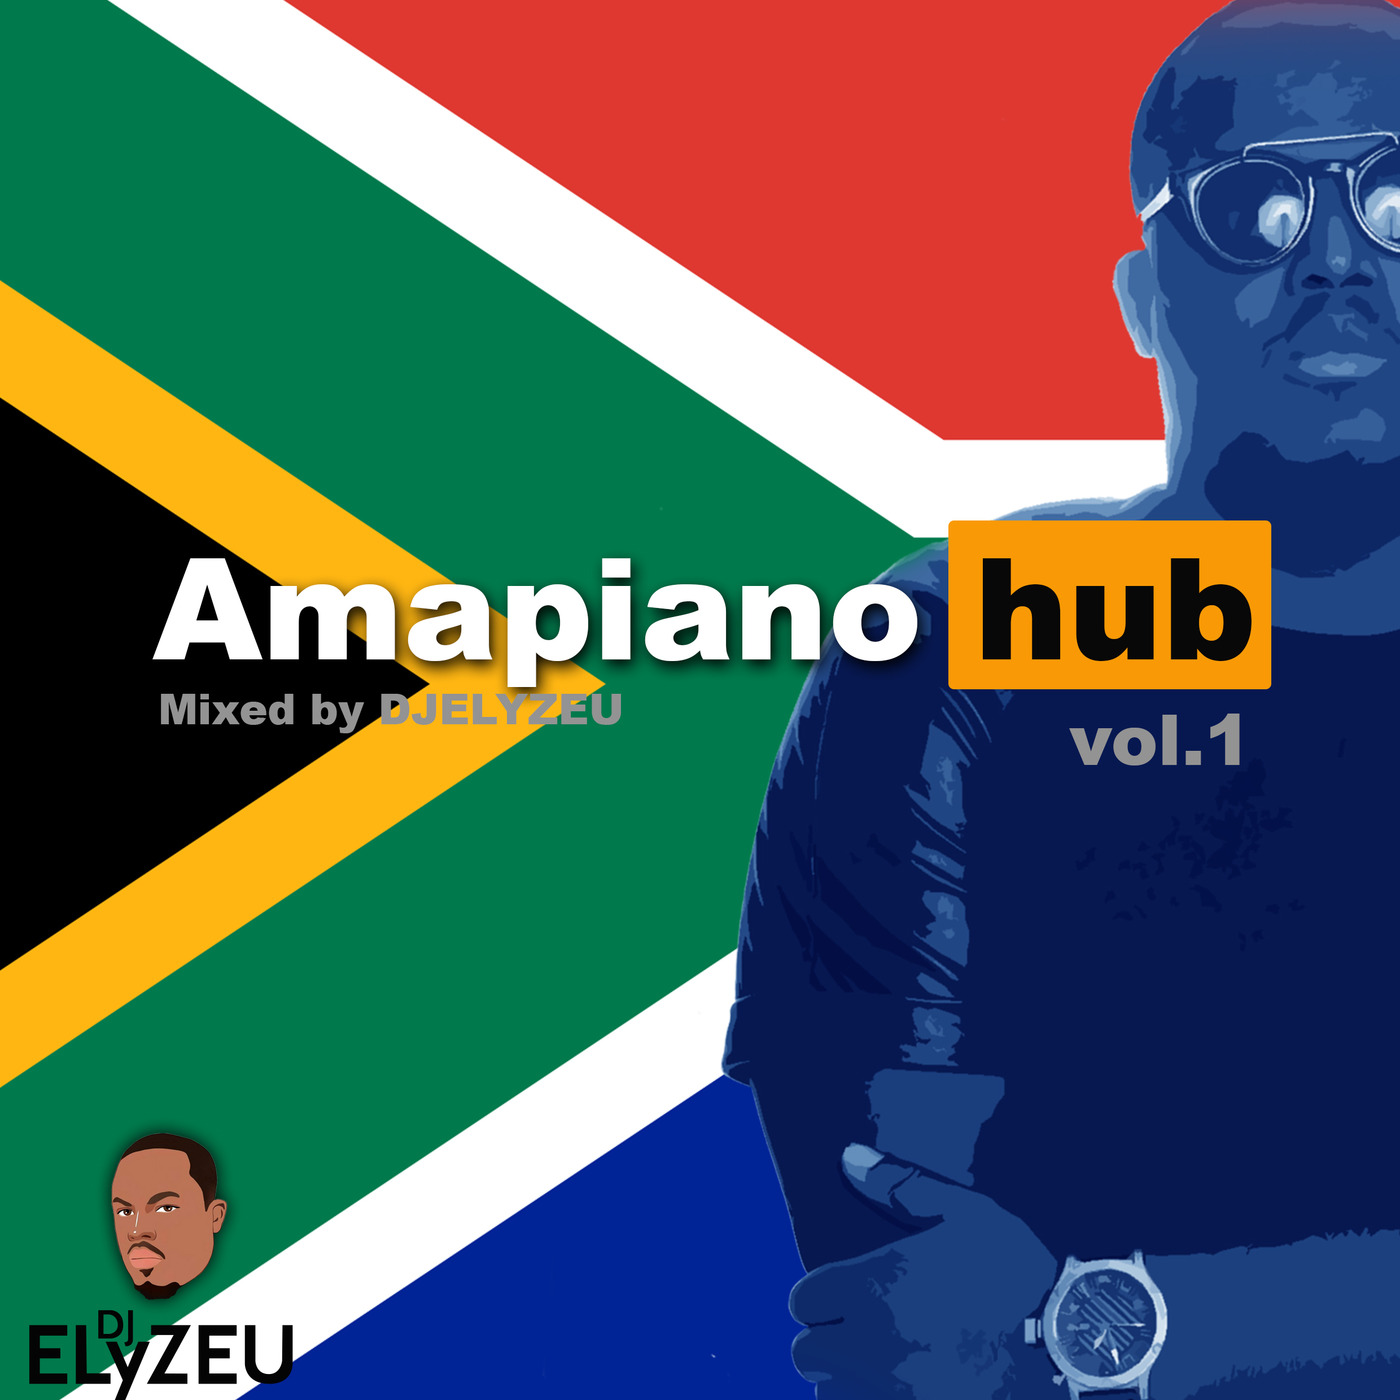 Amapiano hub VOL.1 -Mixed by DJELYZEU